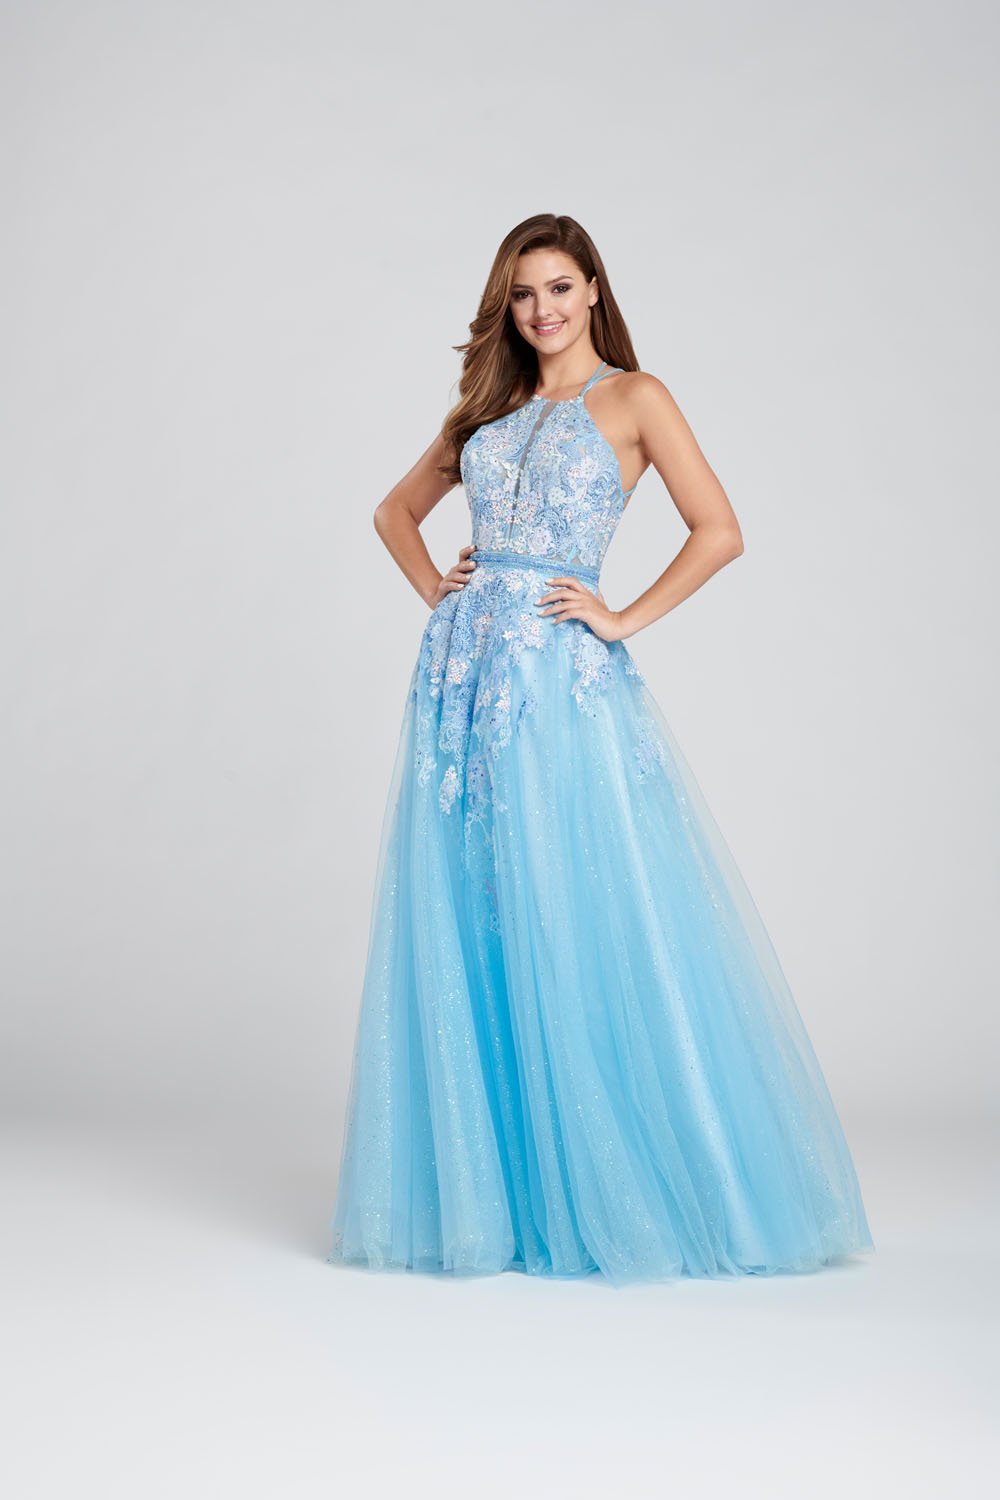 ellie wilde light blue prom dress